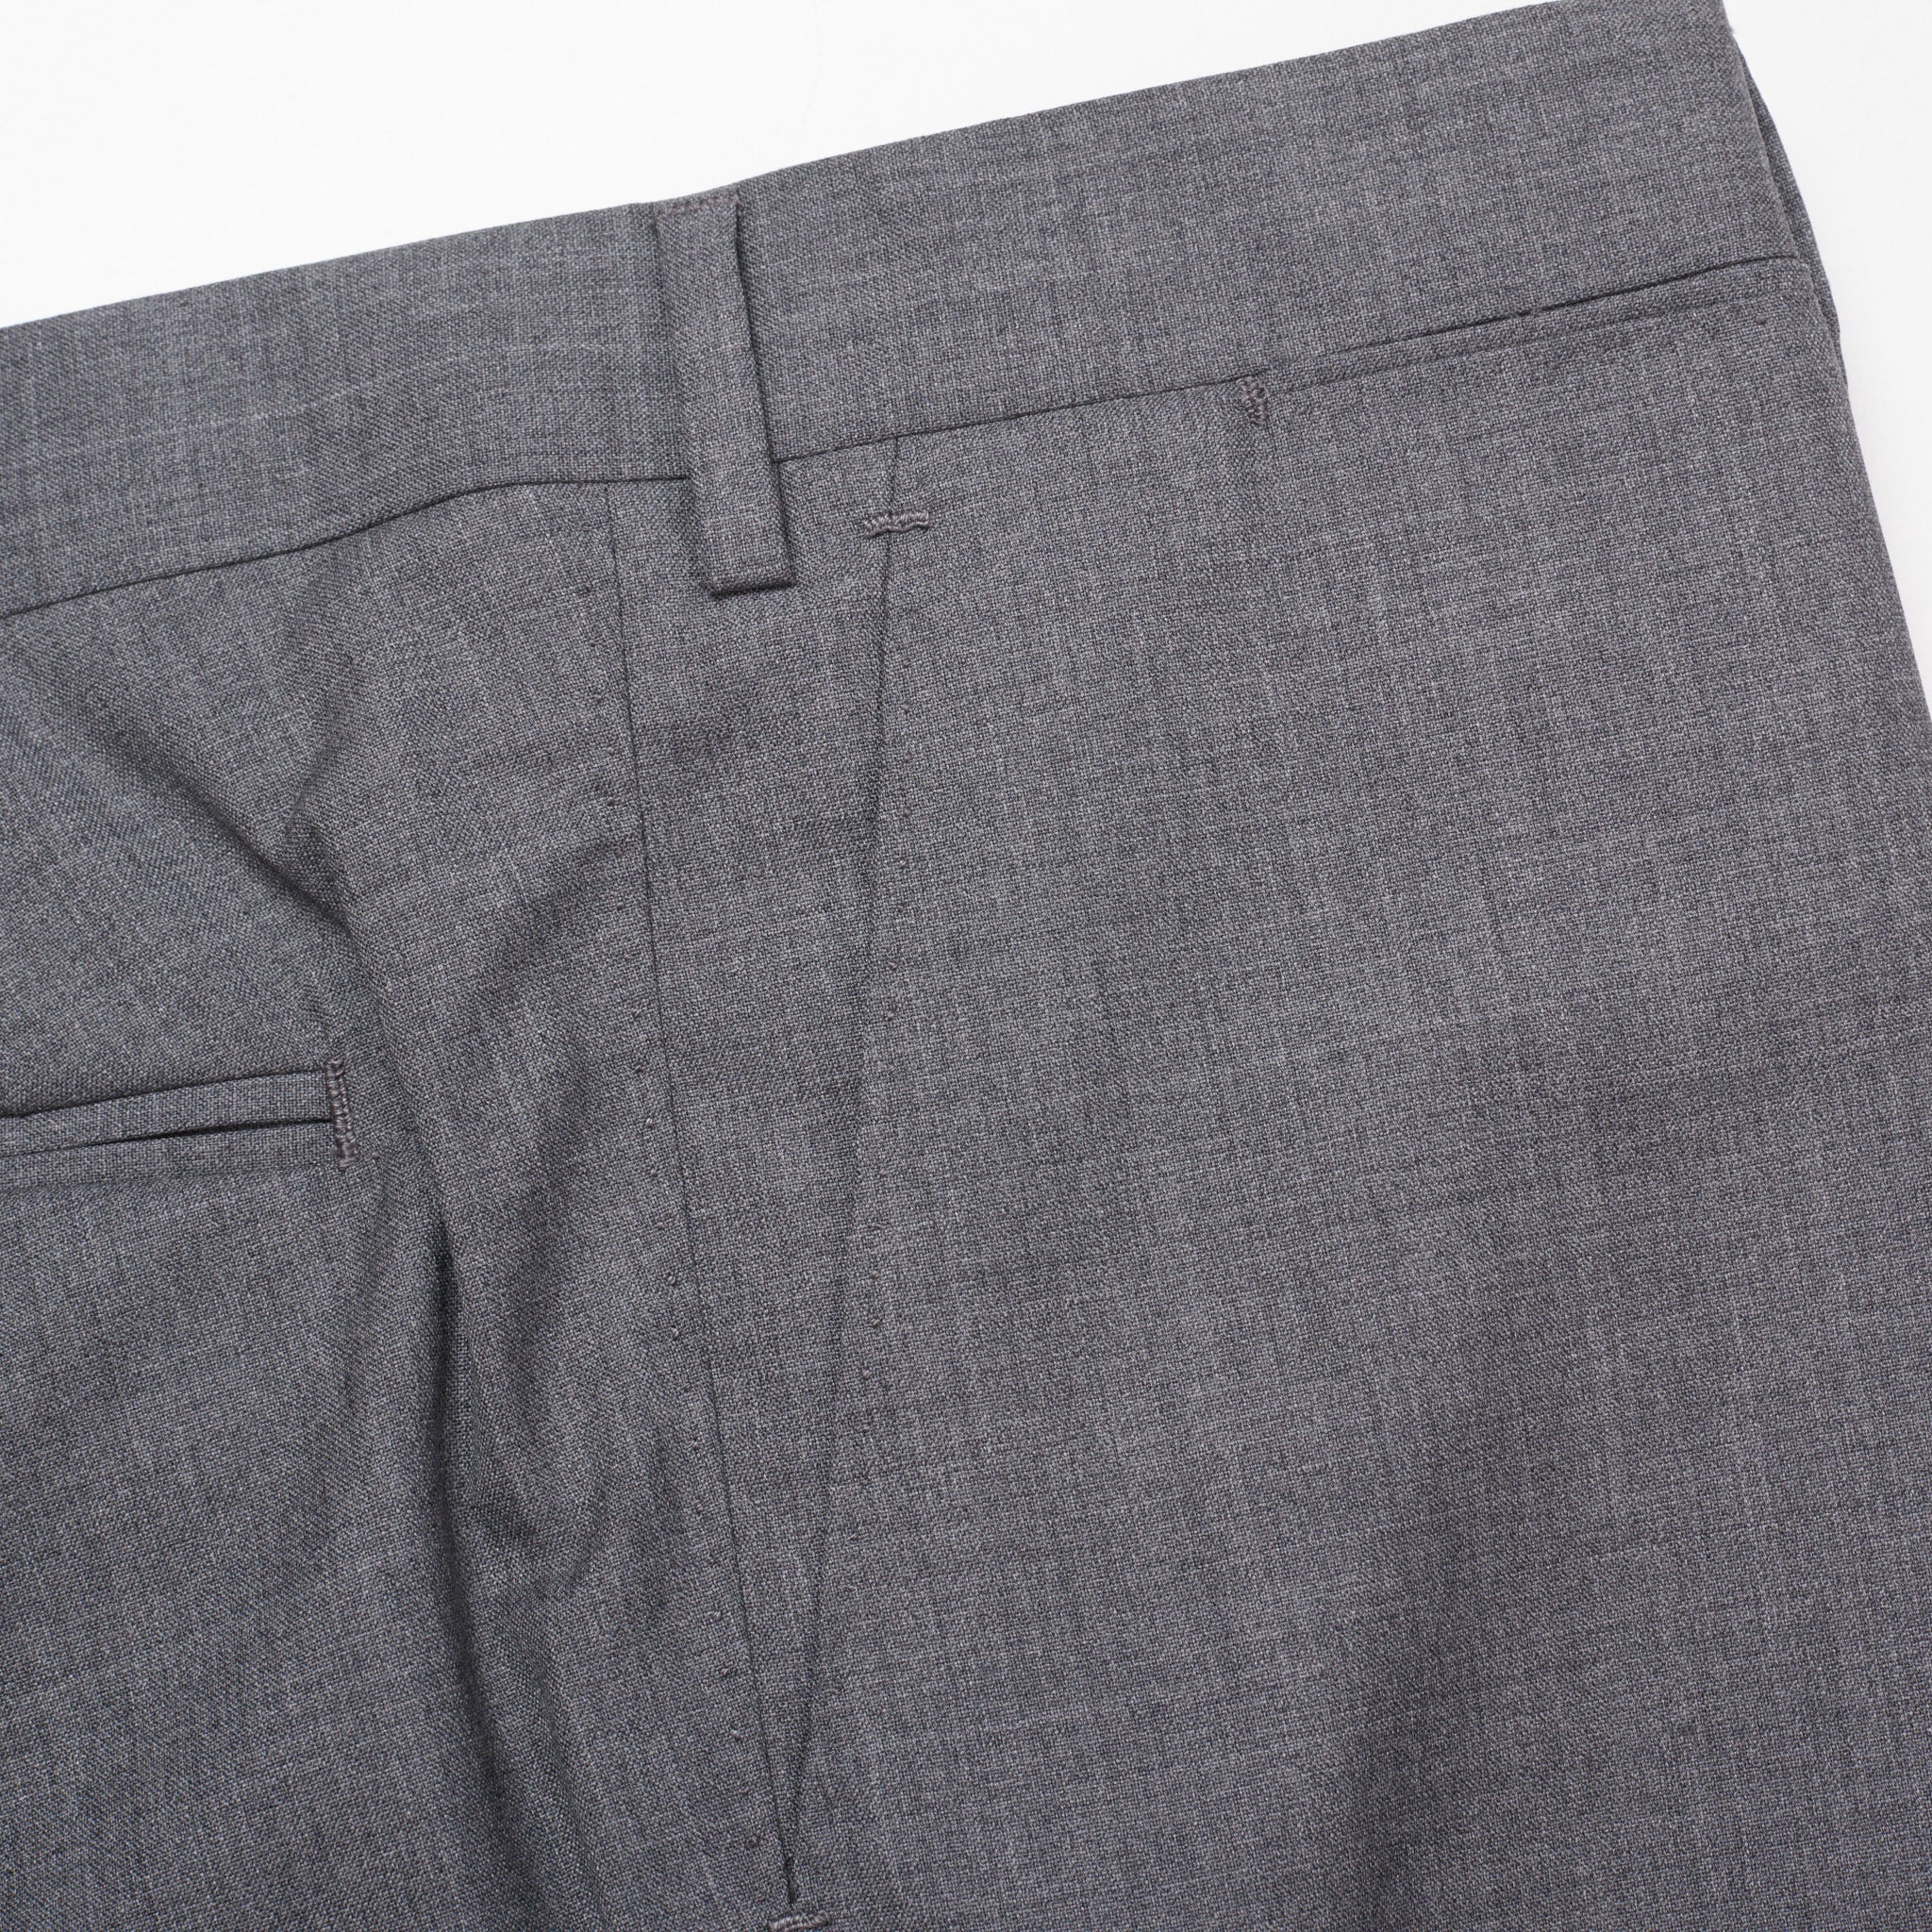 LUIGI BORRELLI Royal Collection L.B.R.C. Gray Wool Flat Front Dress Pants NEW LUIGI BORRELLI